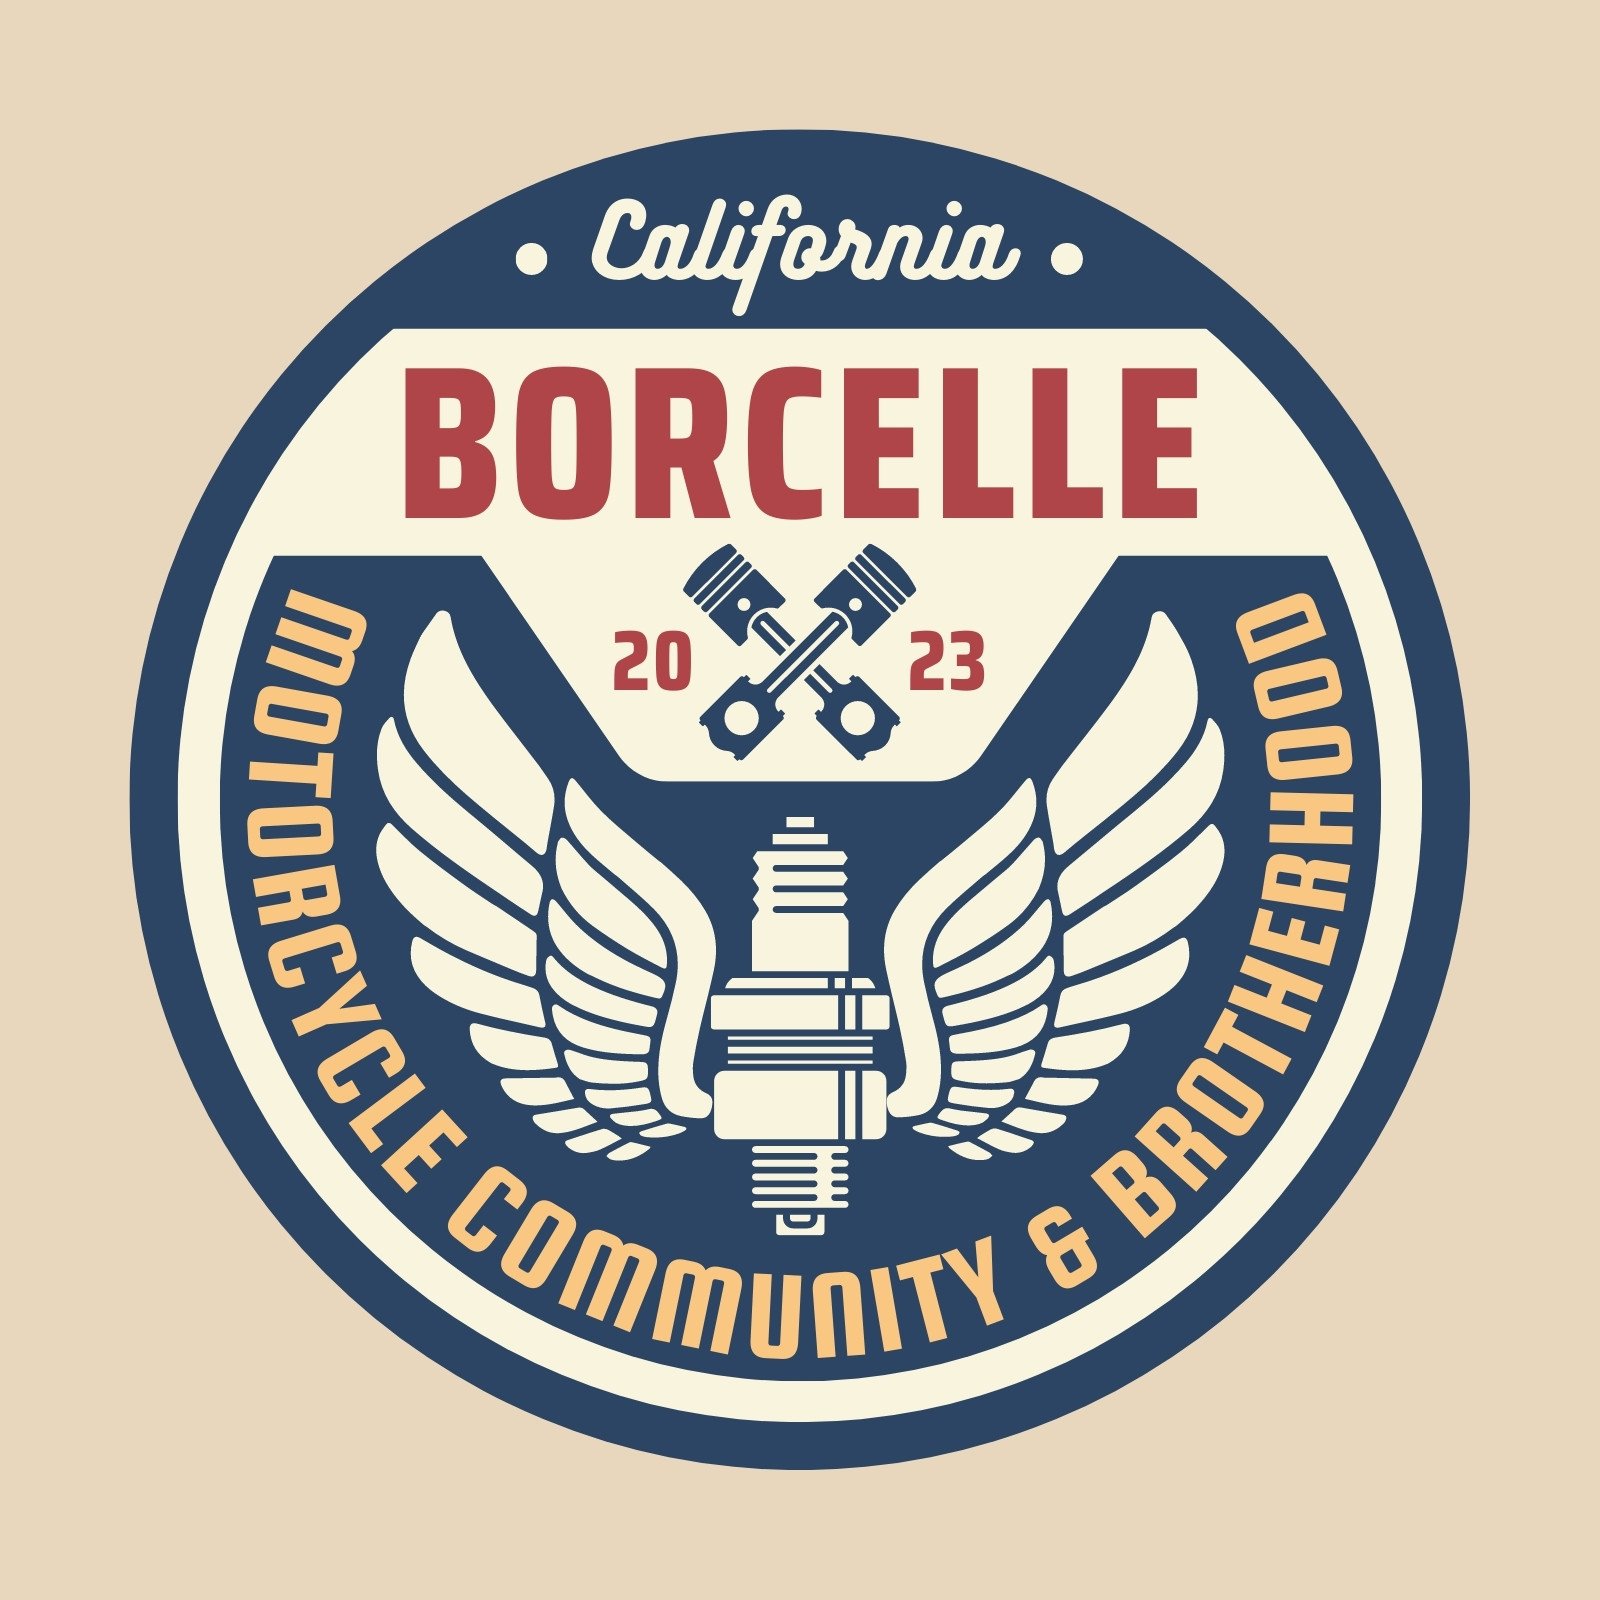 Vintage and Retro Motorcycle Community Club Badge Logo